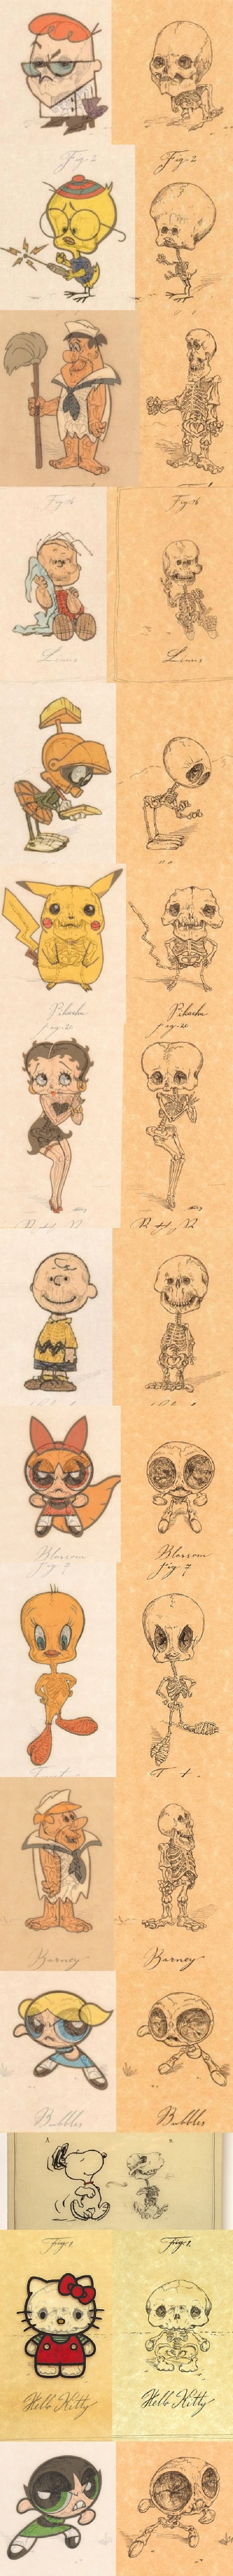 Cartoon characters